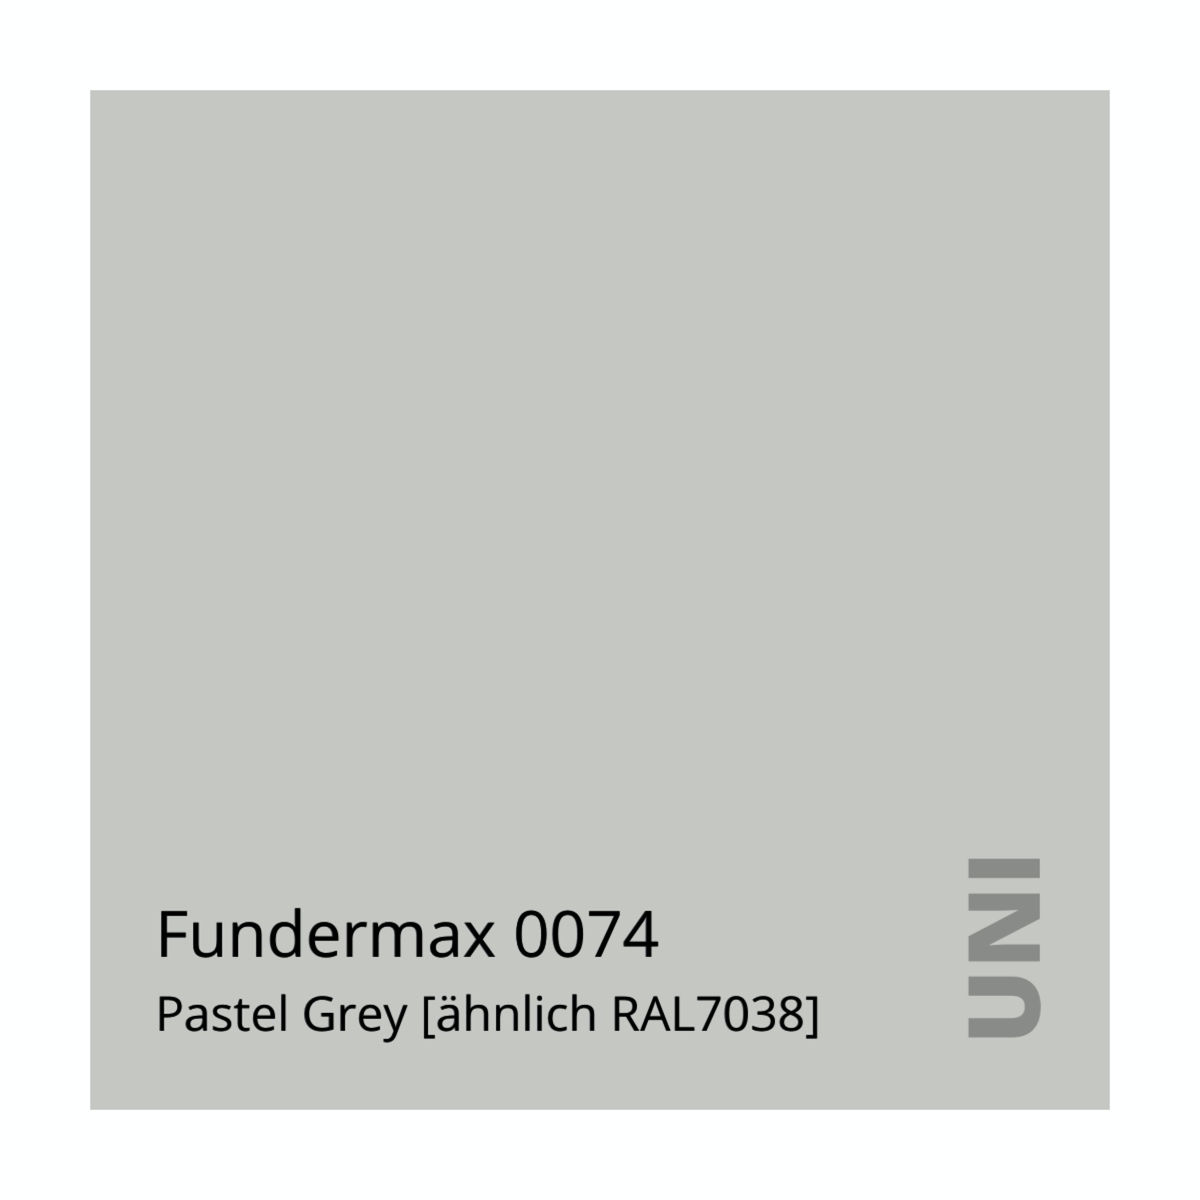 Fundermax 0074 Pastel Grey [ähnlich RAL7038]